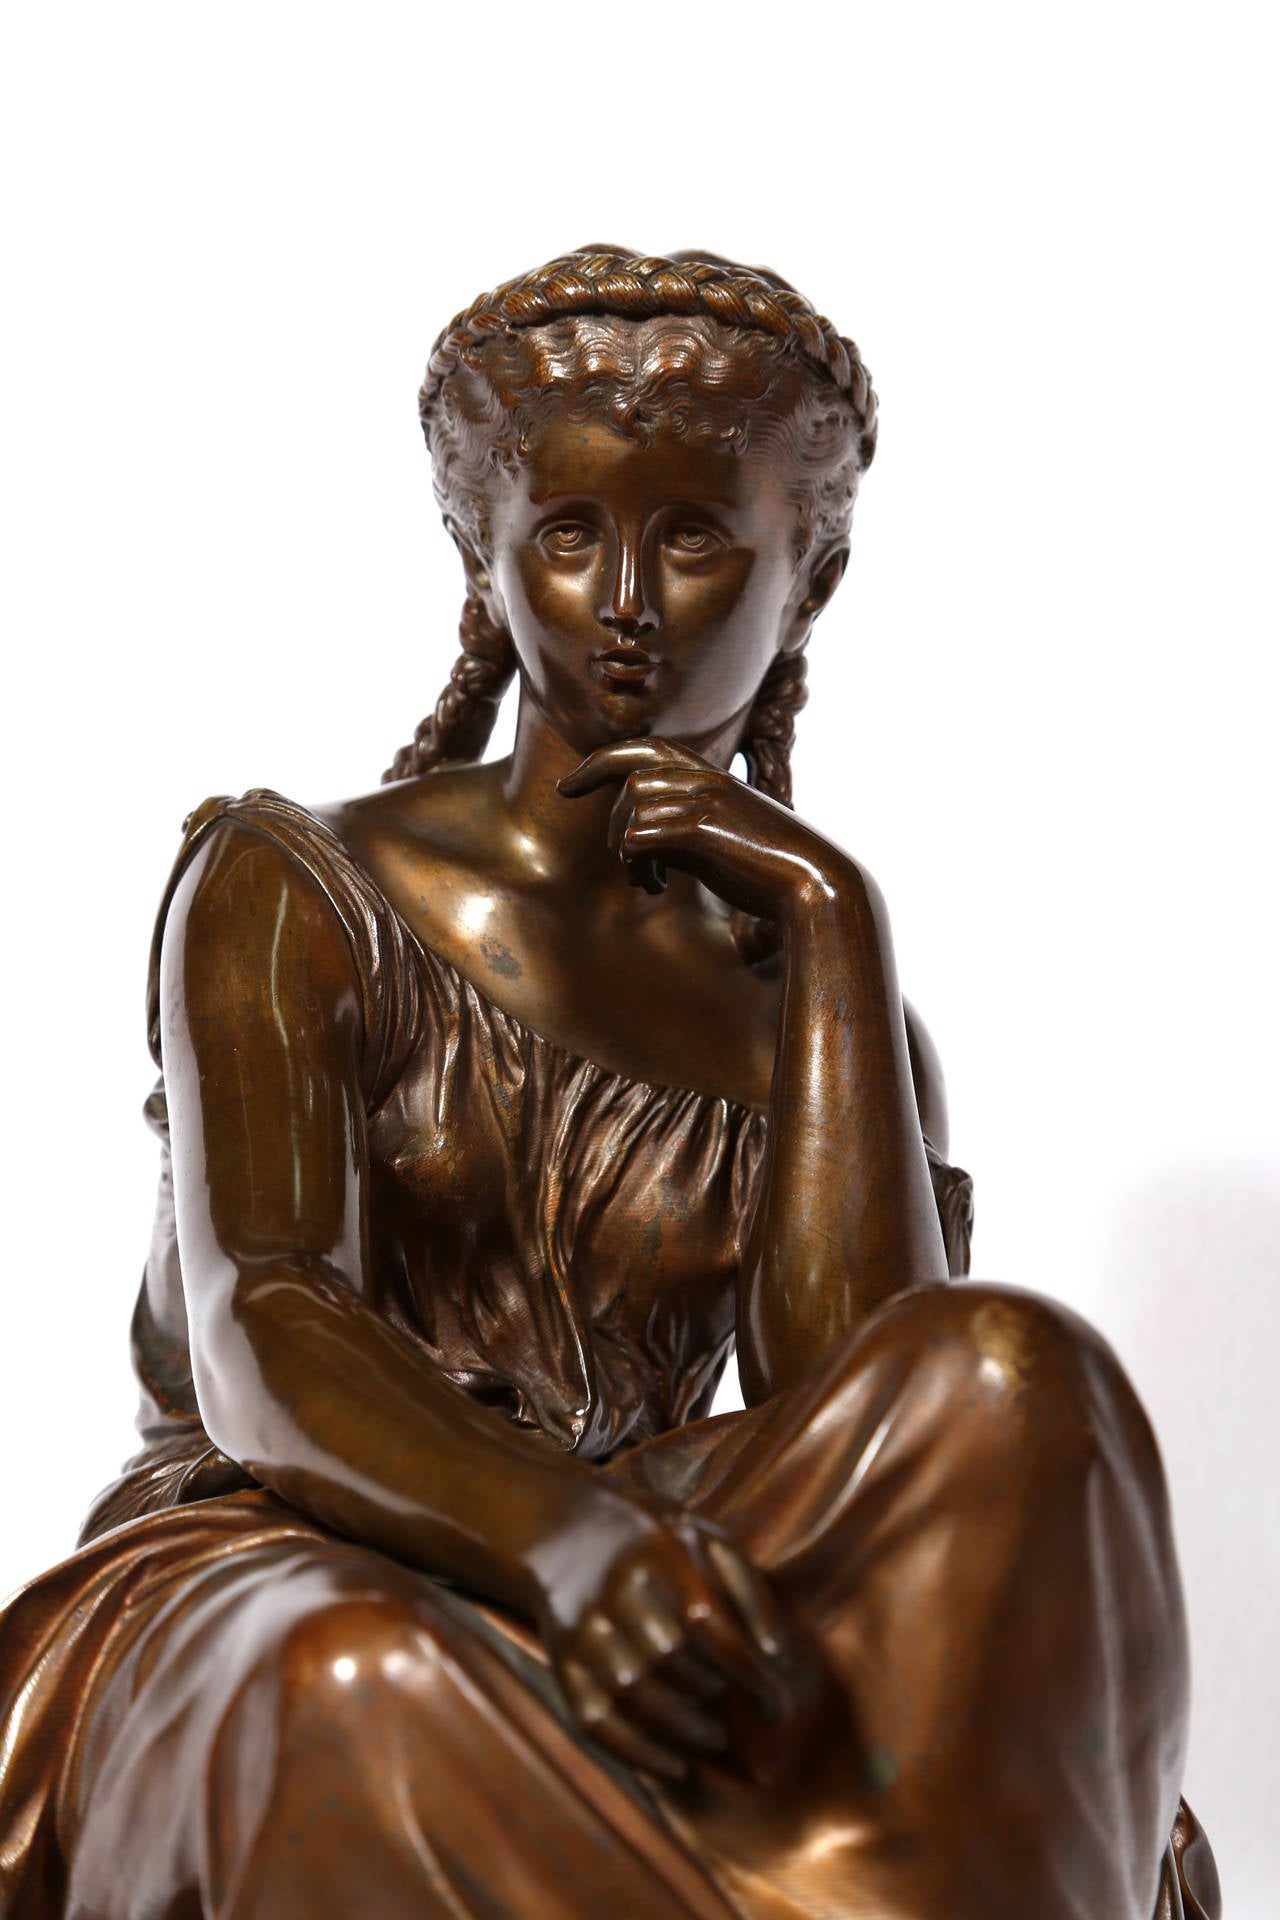 Artist: Hippolyte Moreau, French (1832 - 1927)
Title: Hero
Medium: Bronze Sculpture, signature inscribed
Size: 19 x 11 x 9 in. (48.26 x 27.94 x 22.86 cm)